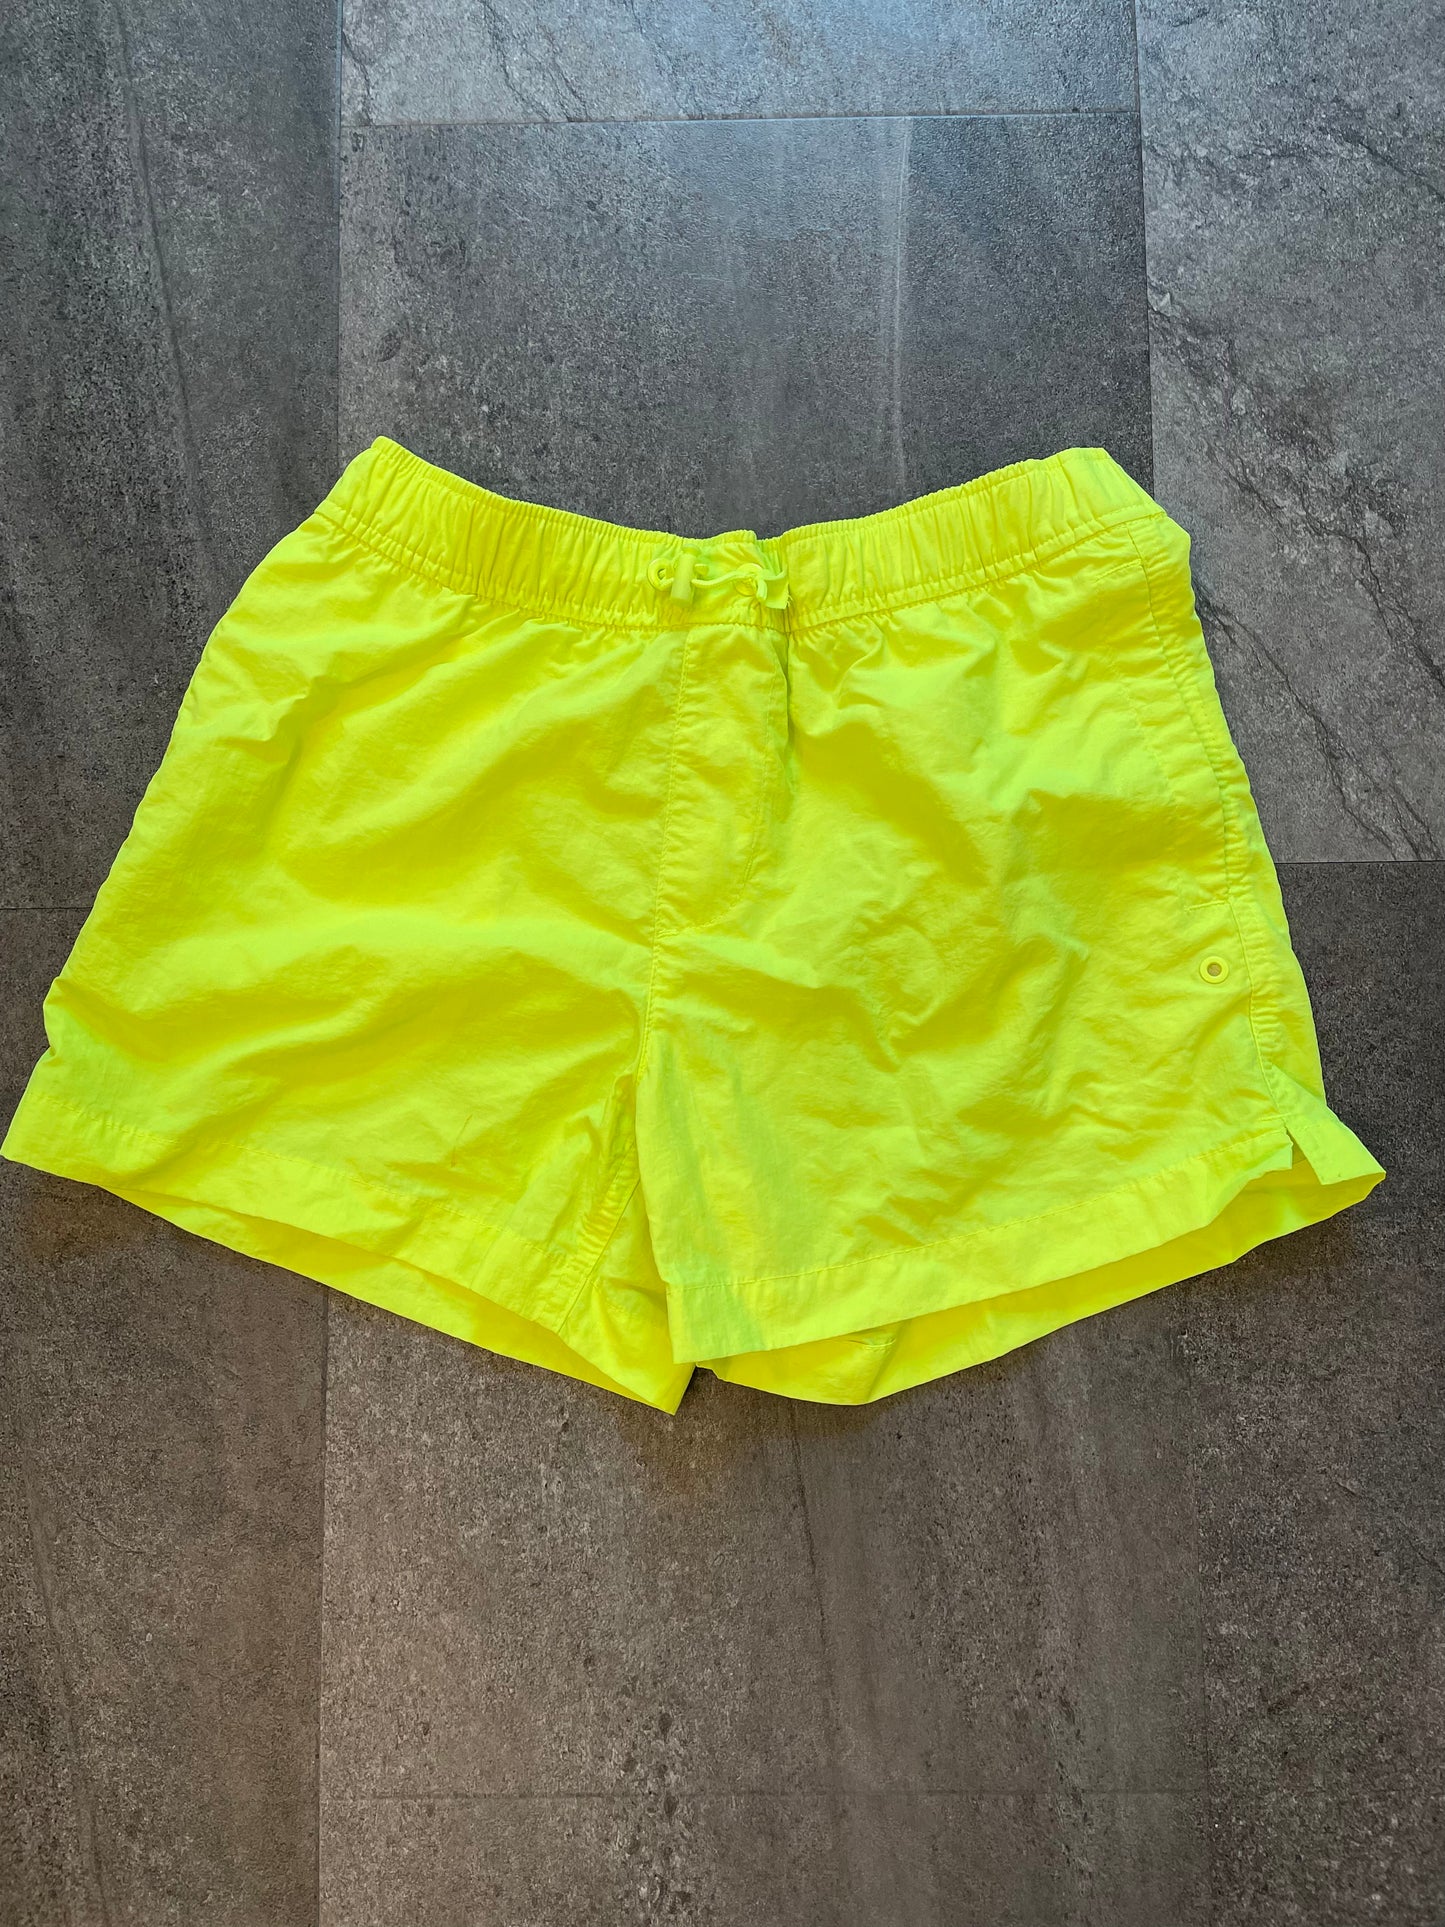 Old Navy Neon Shorts (YM)